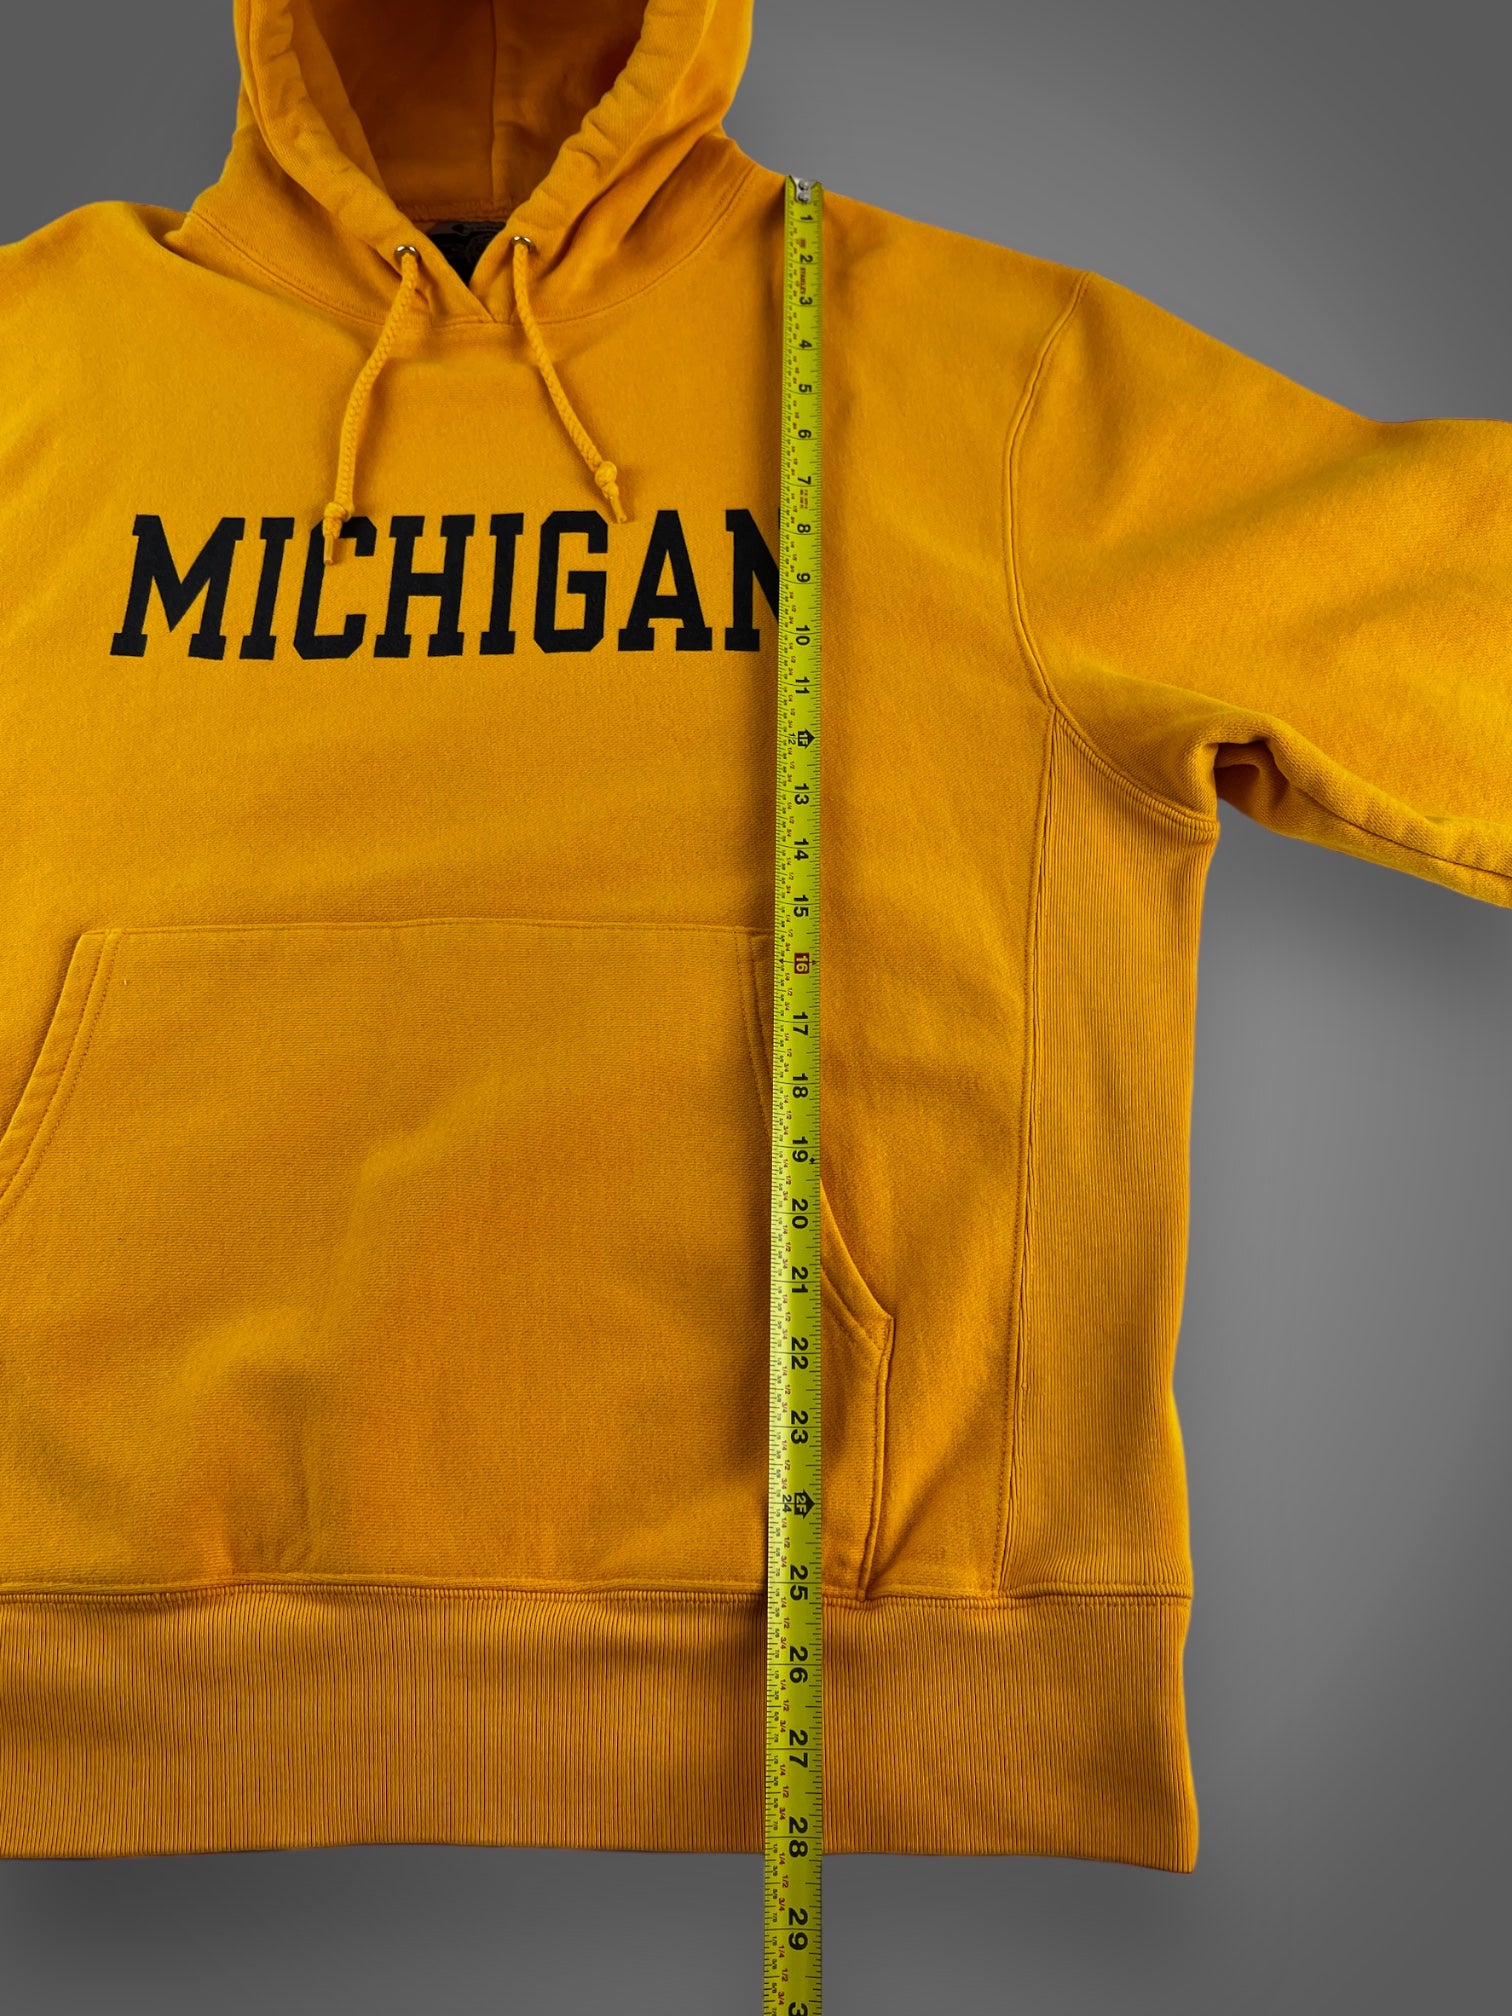 00s Champion U of Michigan hooded sweatshirt fits XL